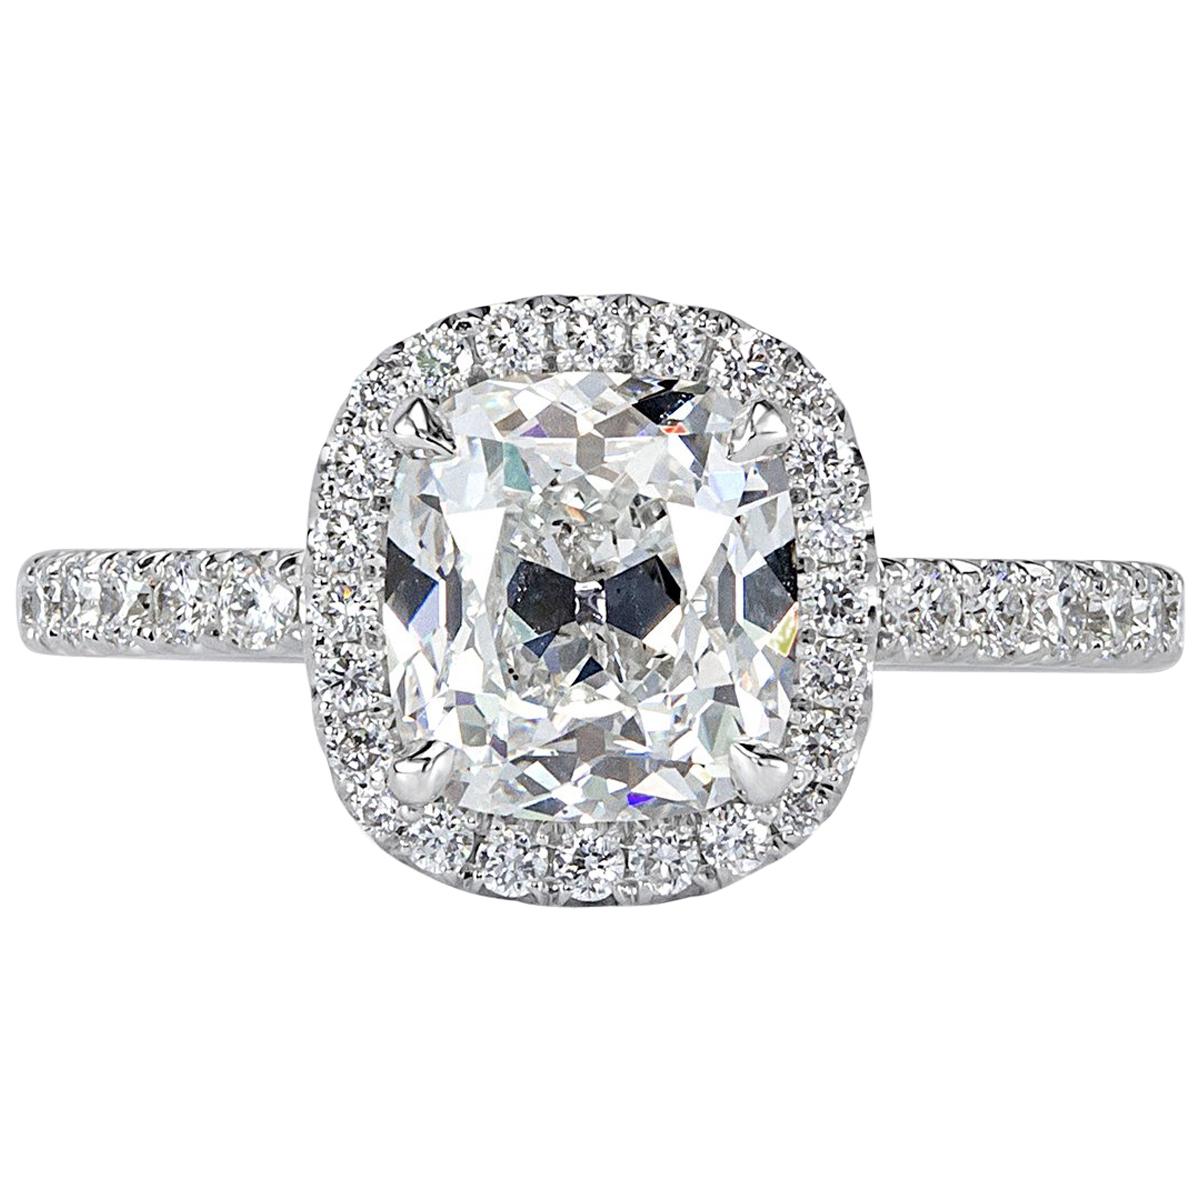 Mark Broumand 2.67 Carat Old Mine Cut Diamond Engagement Ring